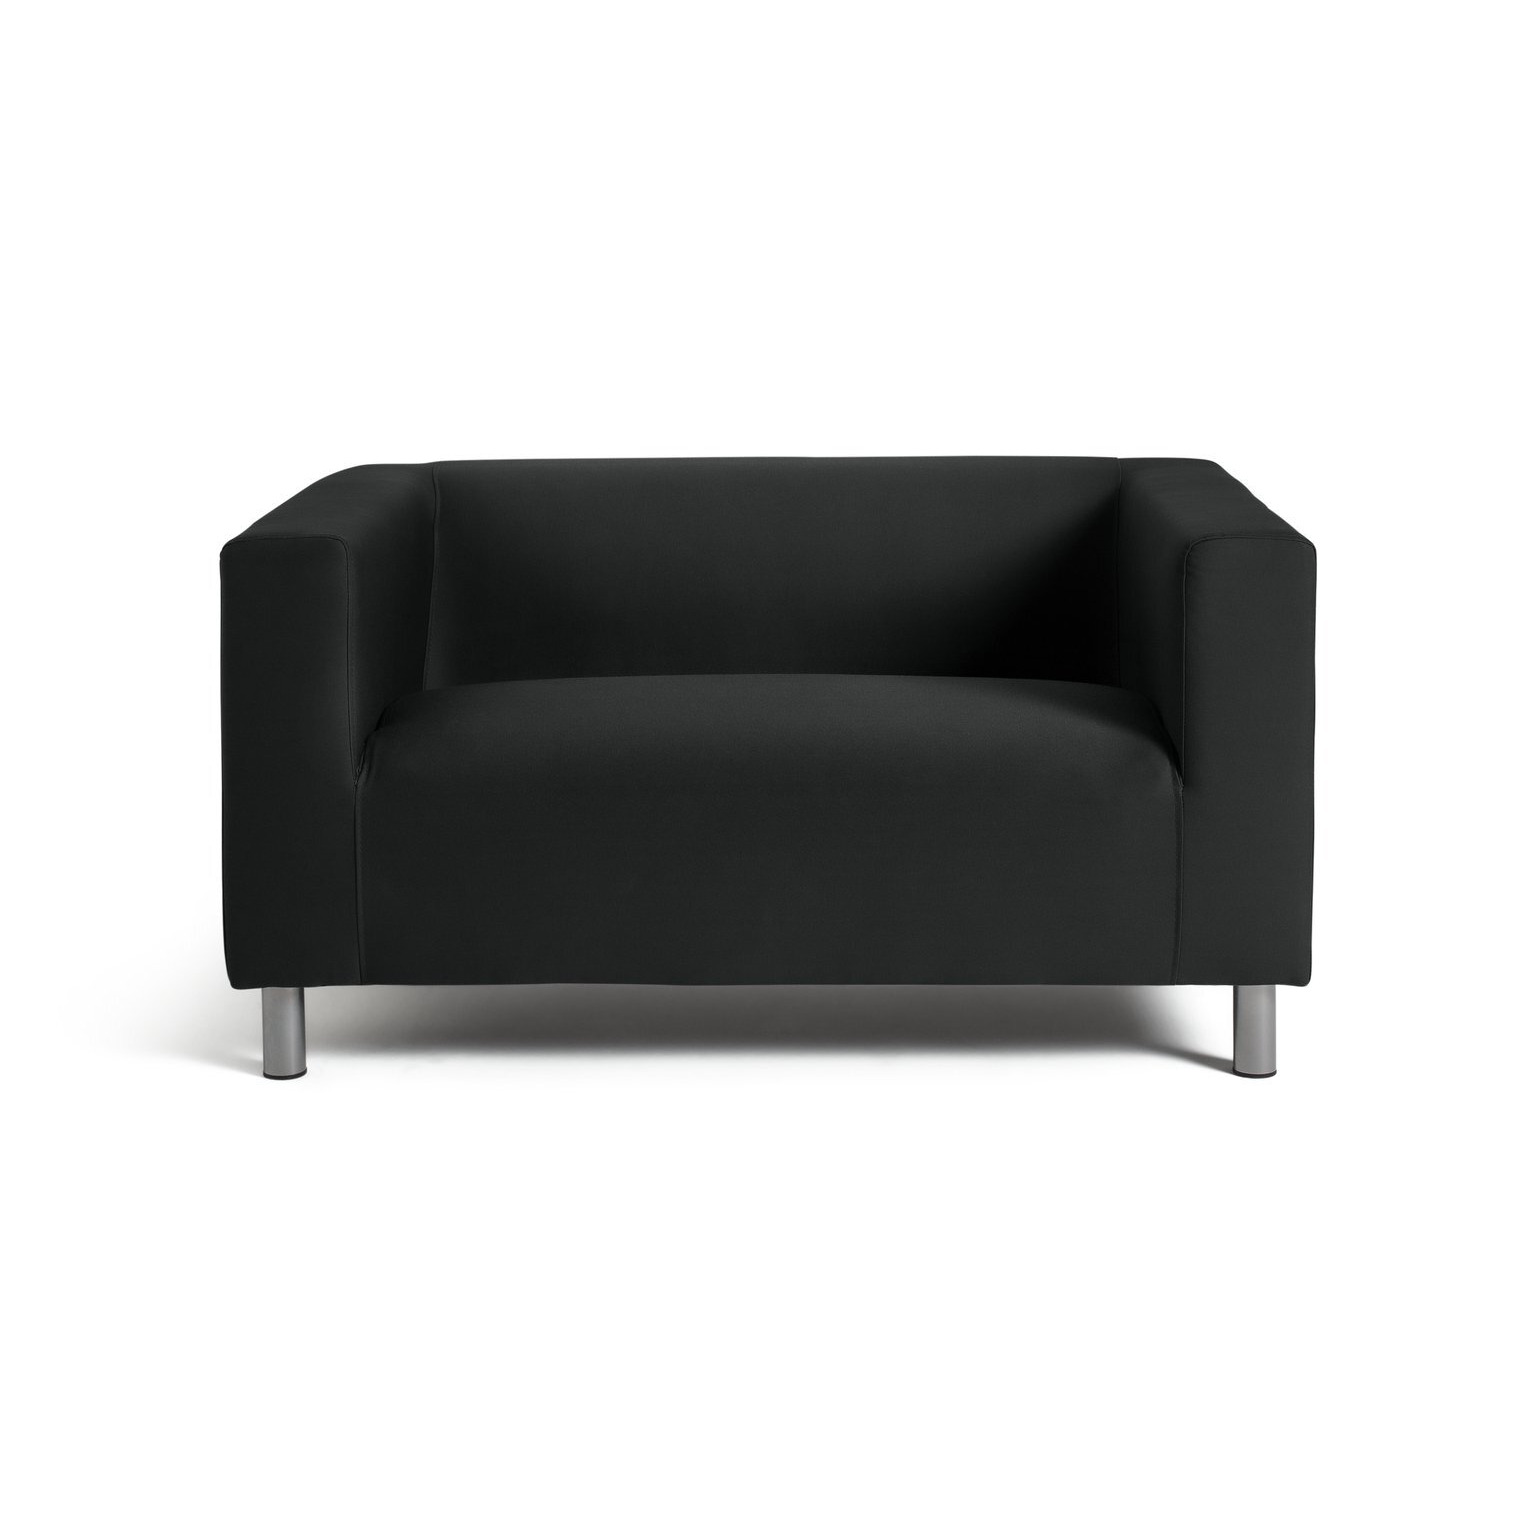 Argos Home Moda Small Fabric 2 Seater Sofa - Black - image 1